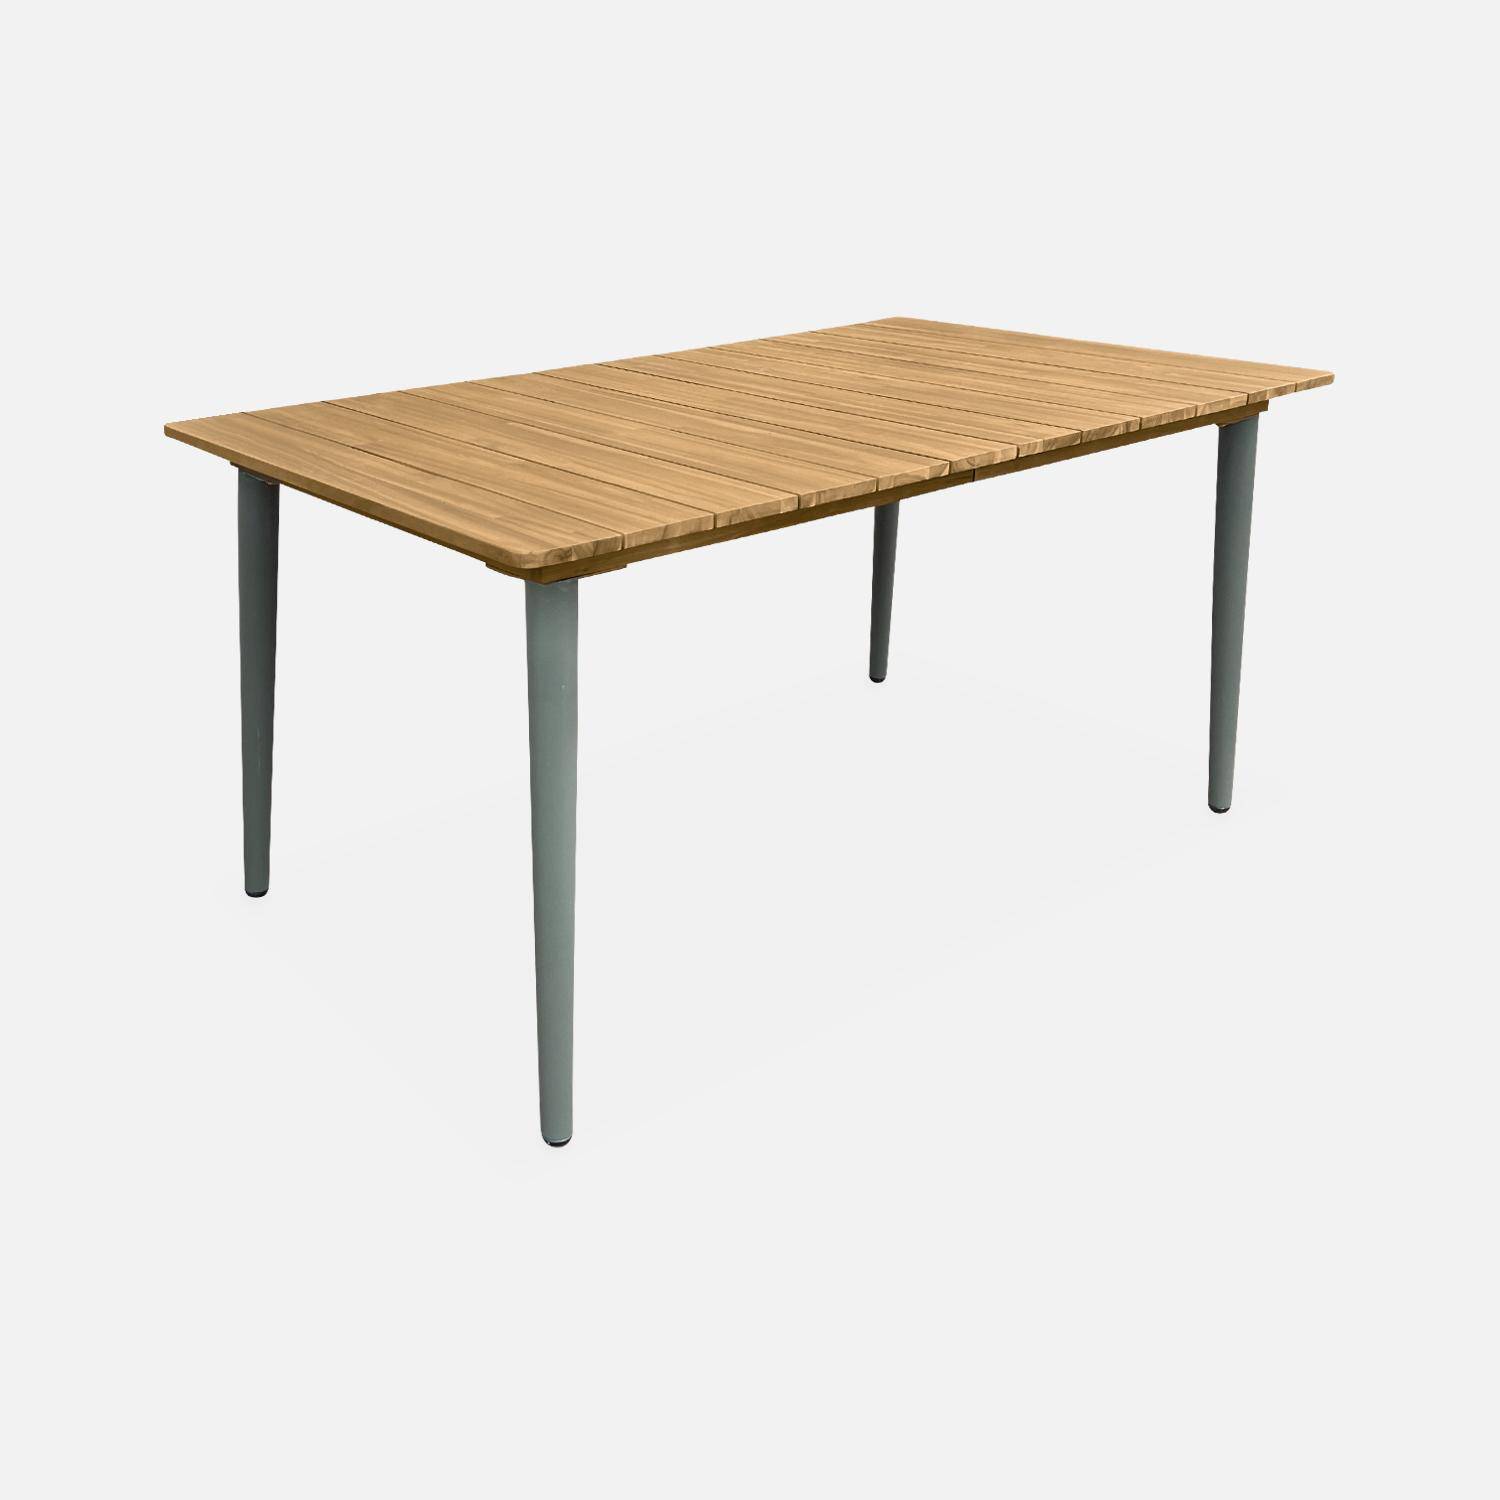 Table de jardin MARINGA bois et métal savane, 150cm + 4 chaises de jardin Ocara, cannage et bois,sweeek,Photo4